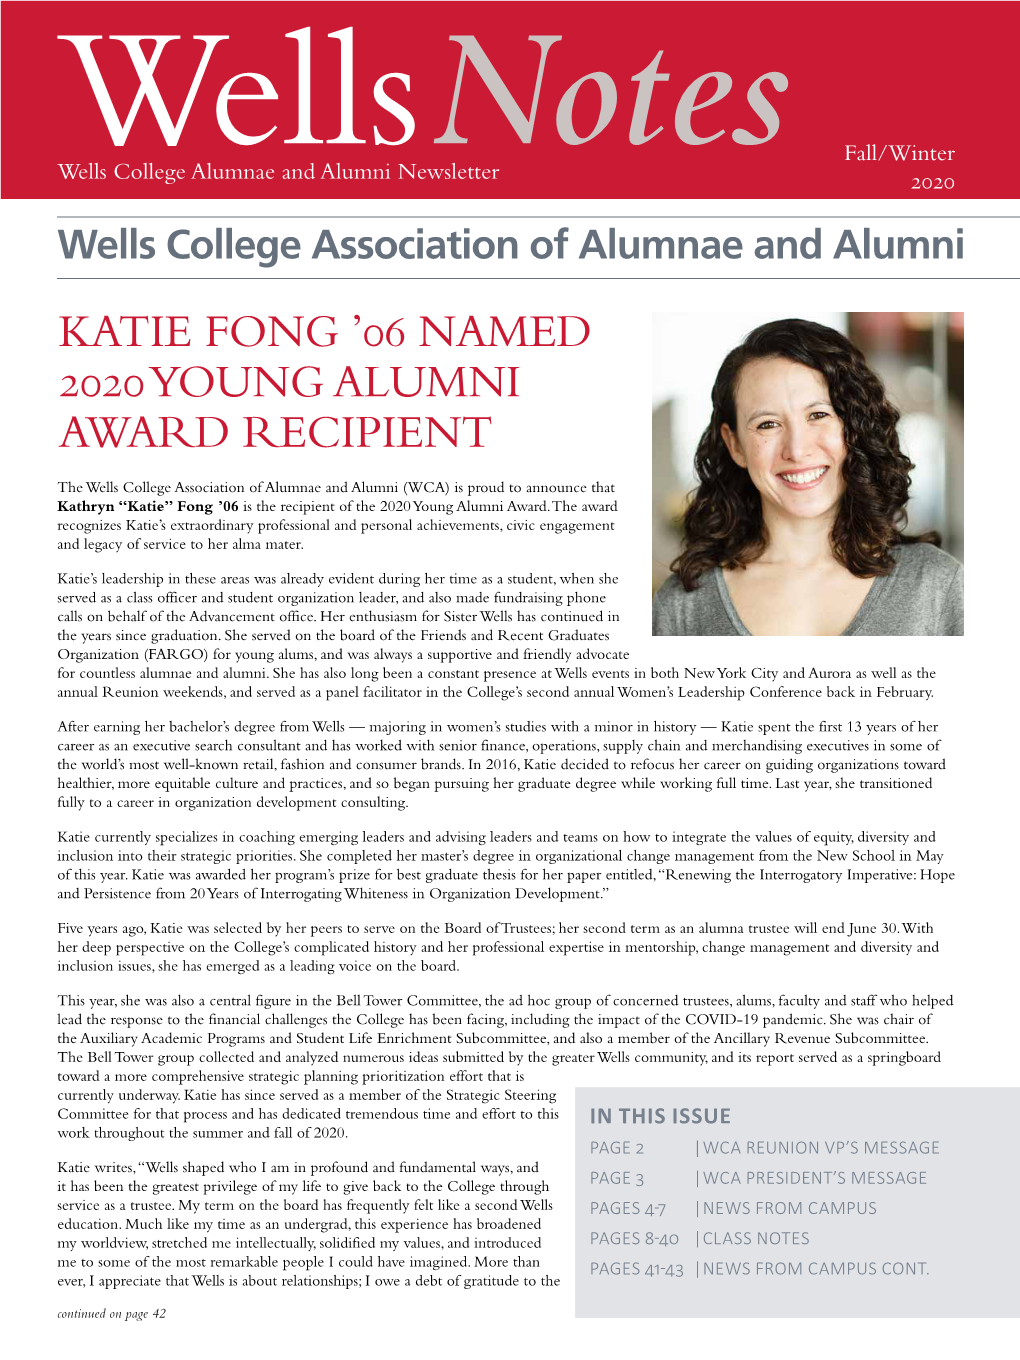 Katie Fong ’06 Named 2020 Young Alumni Award Recipient